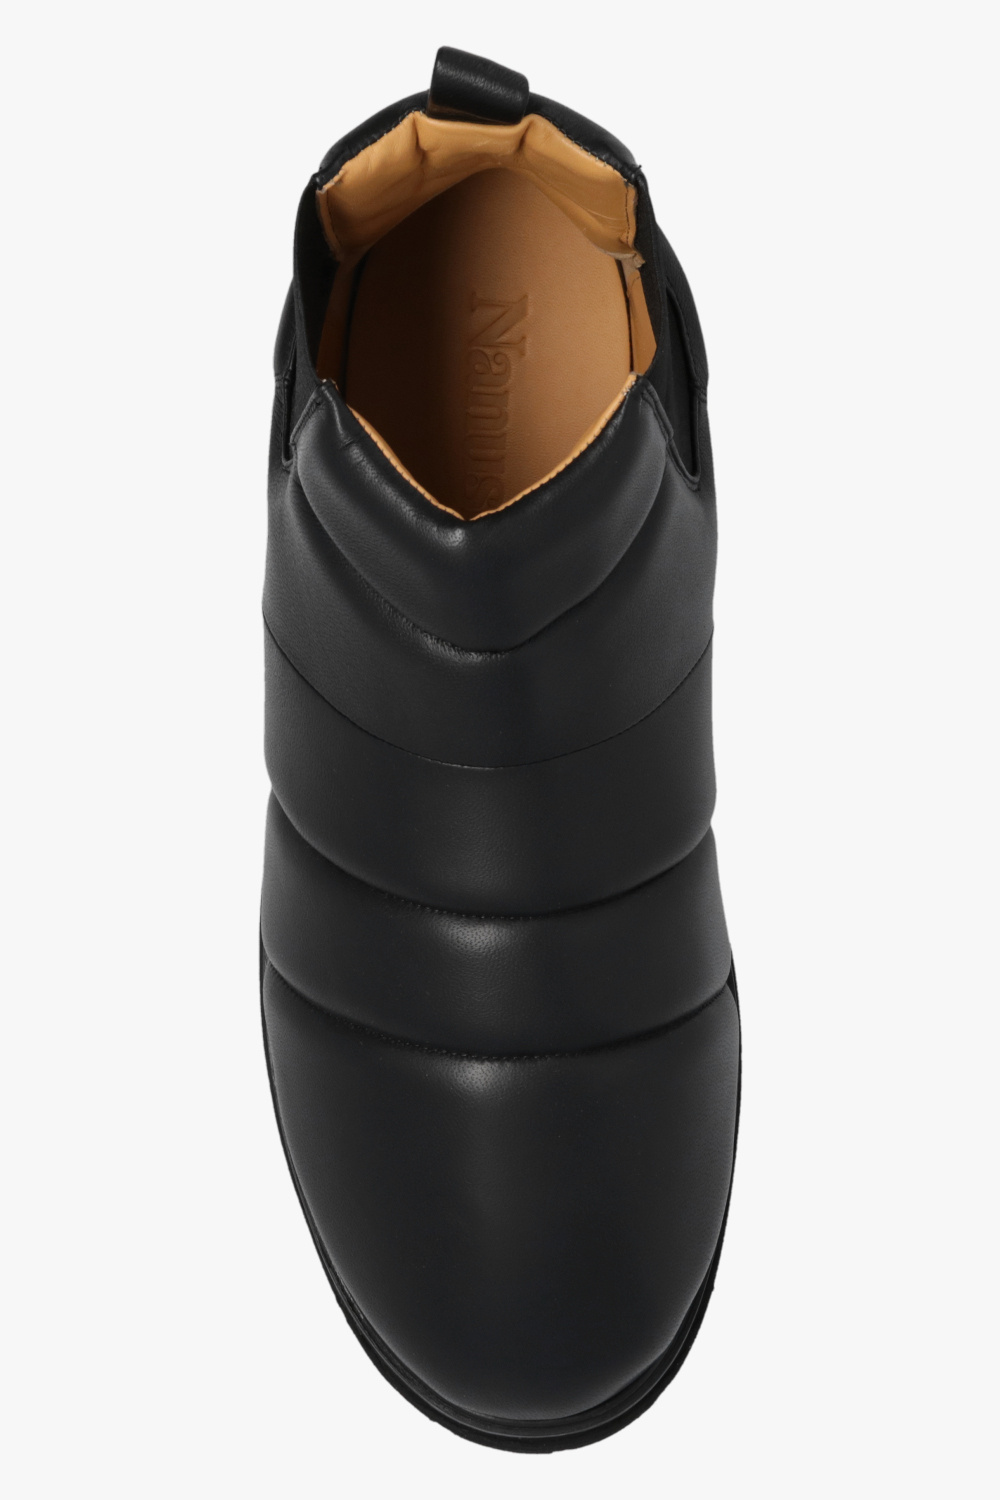 Nanushka ‘BEDE’ leather boots